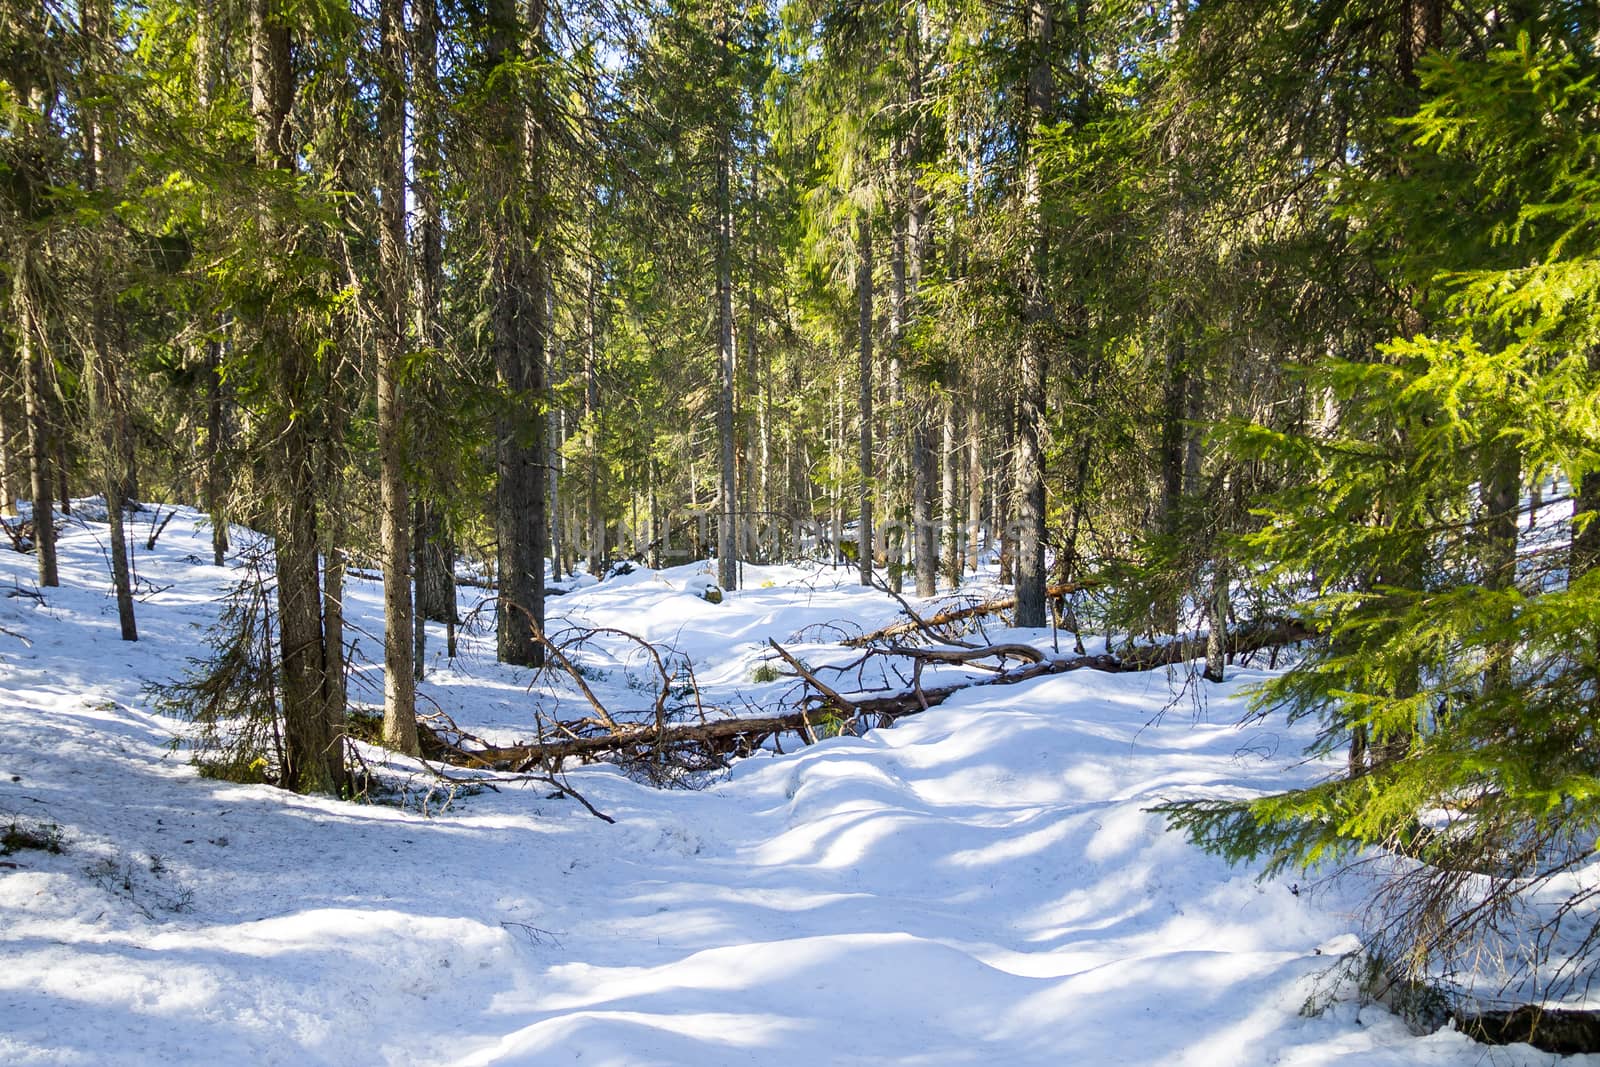 Snowy virgin forest in the winter